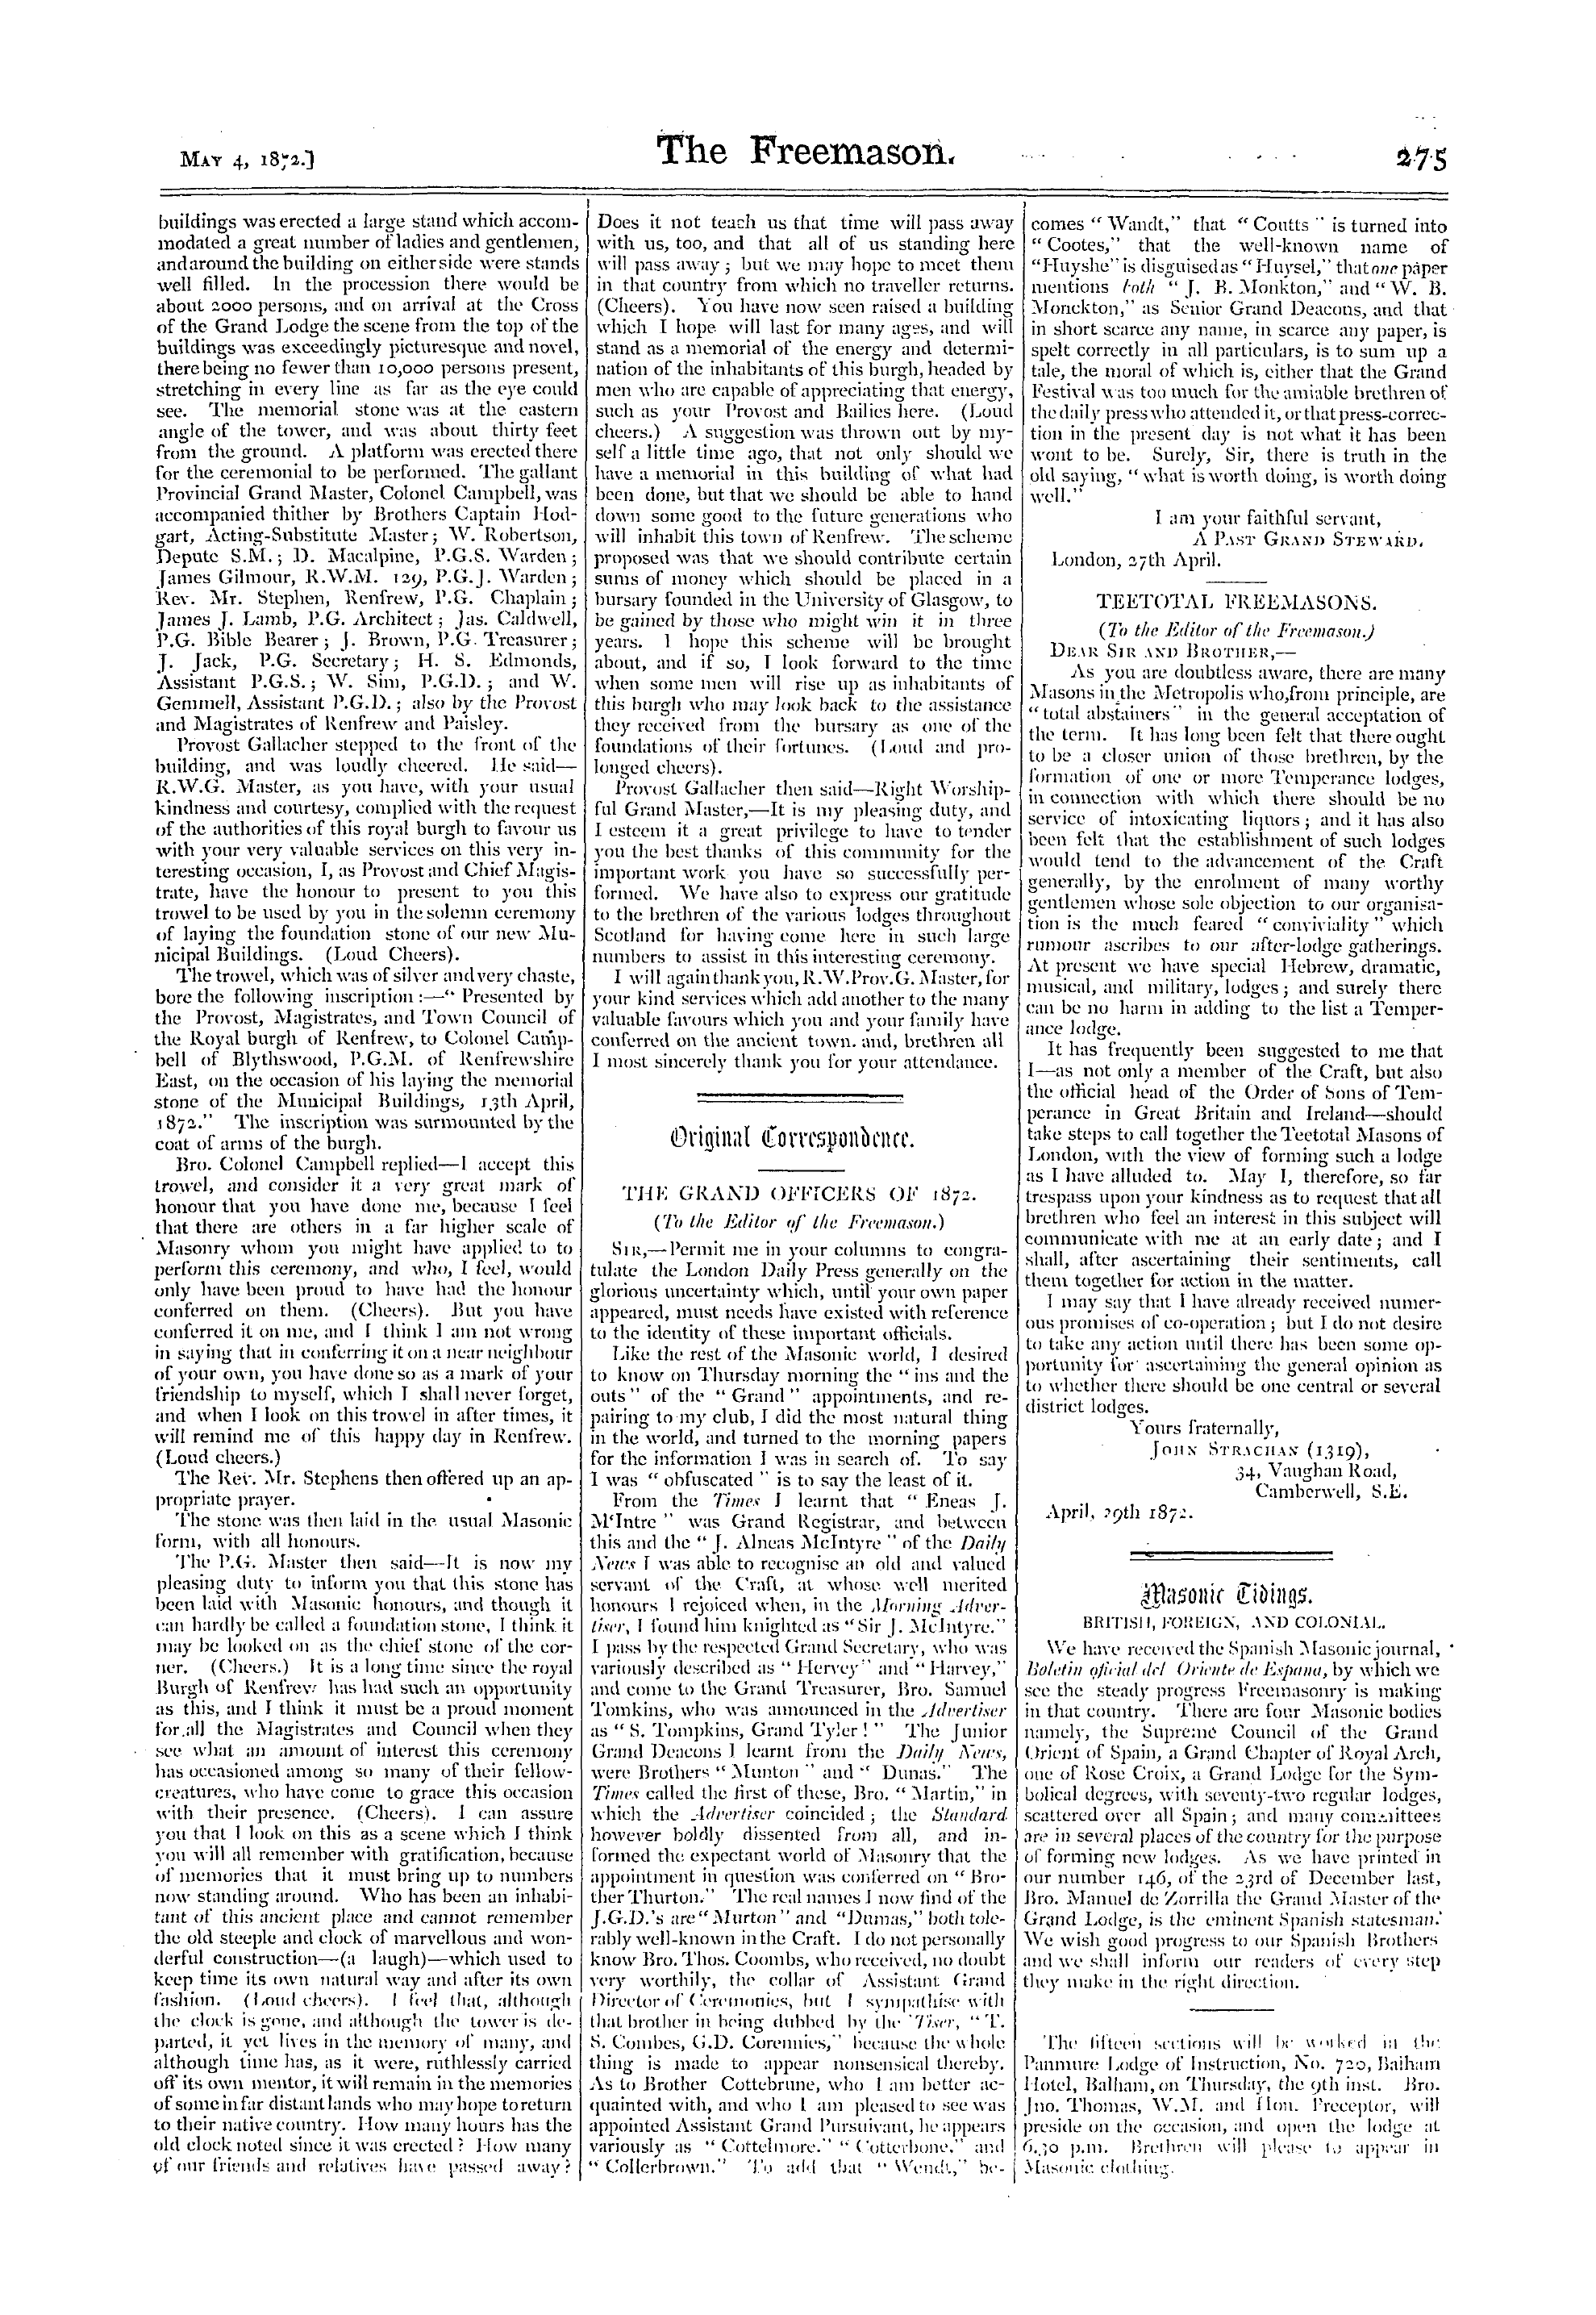 The Freemason: 1872-05-04 - Original Correspondence.